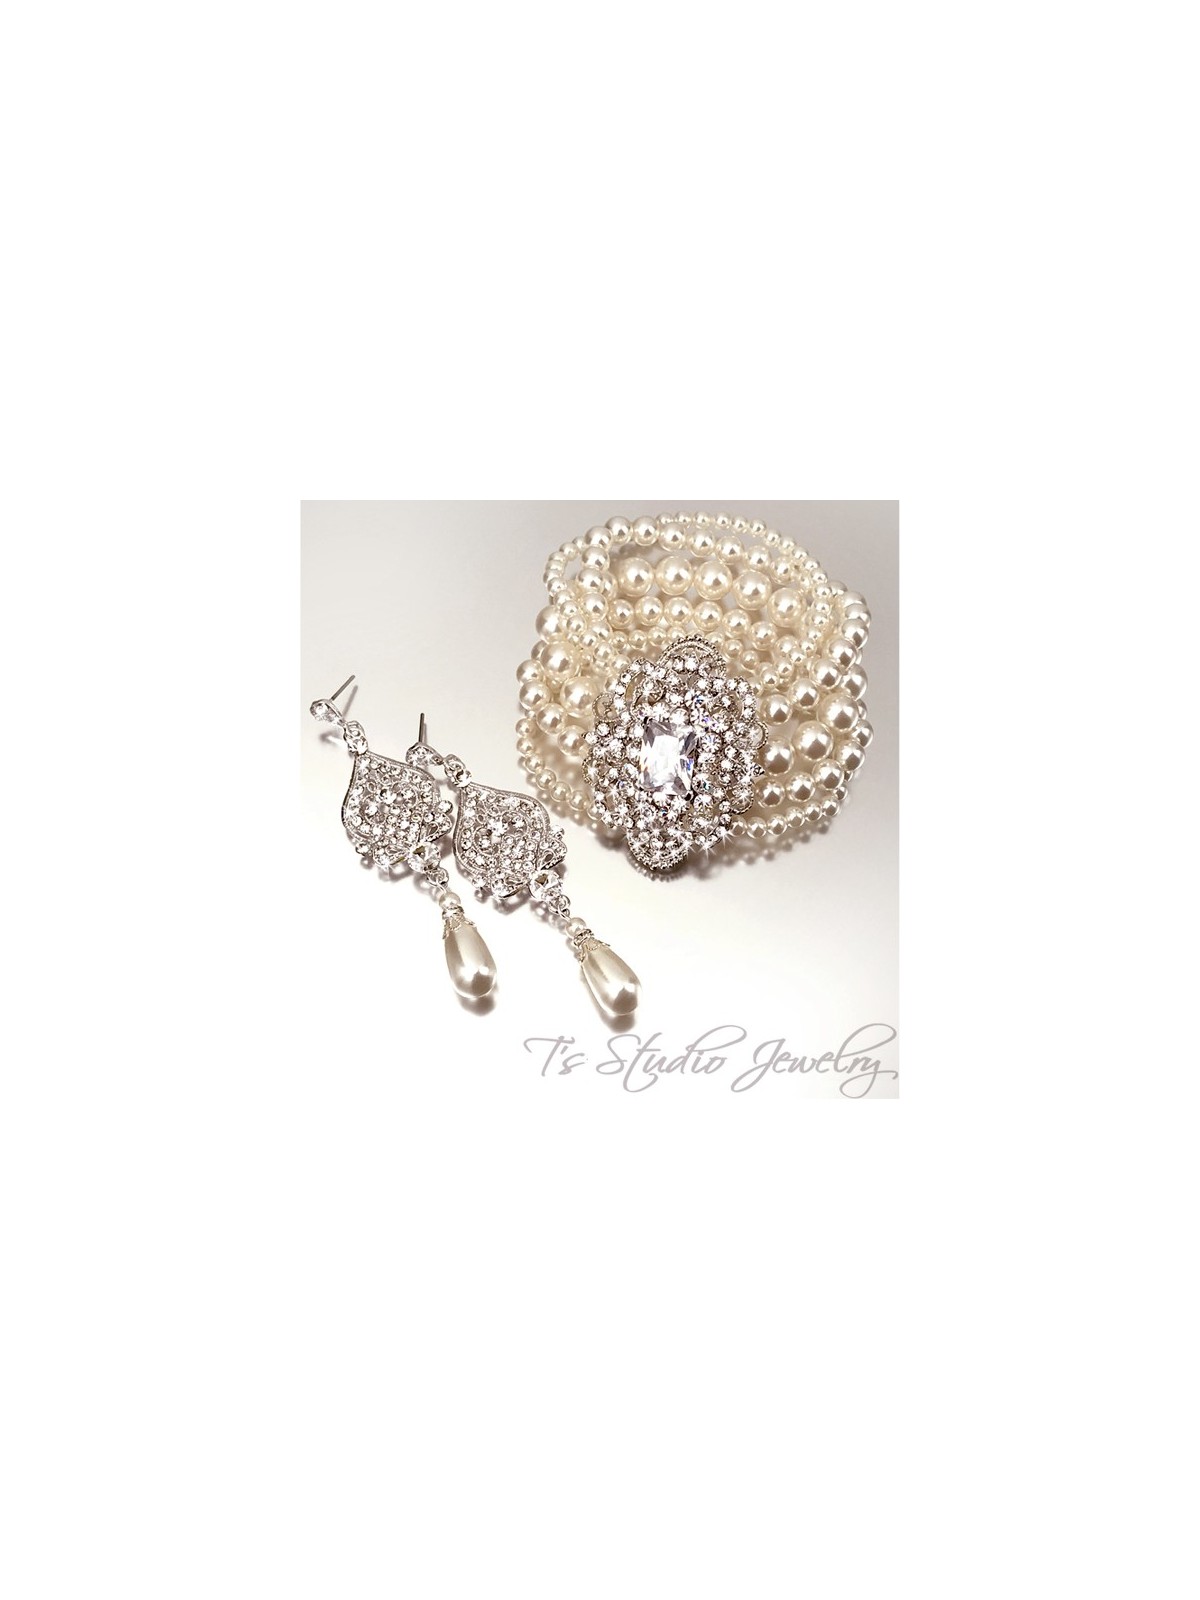 Wedding Pearl Cuff Bridal Bracelet & Crystal Chandelier Earrings Set